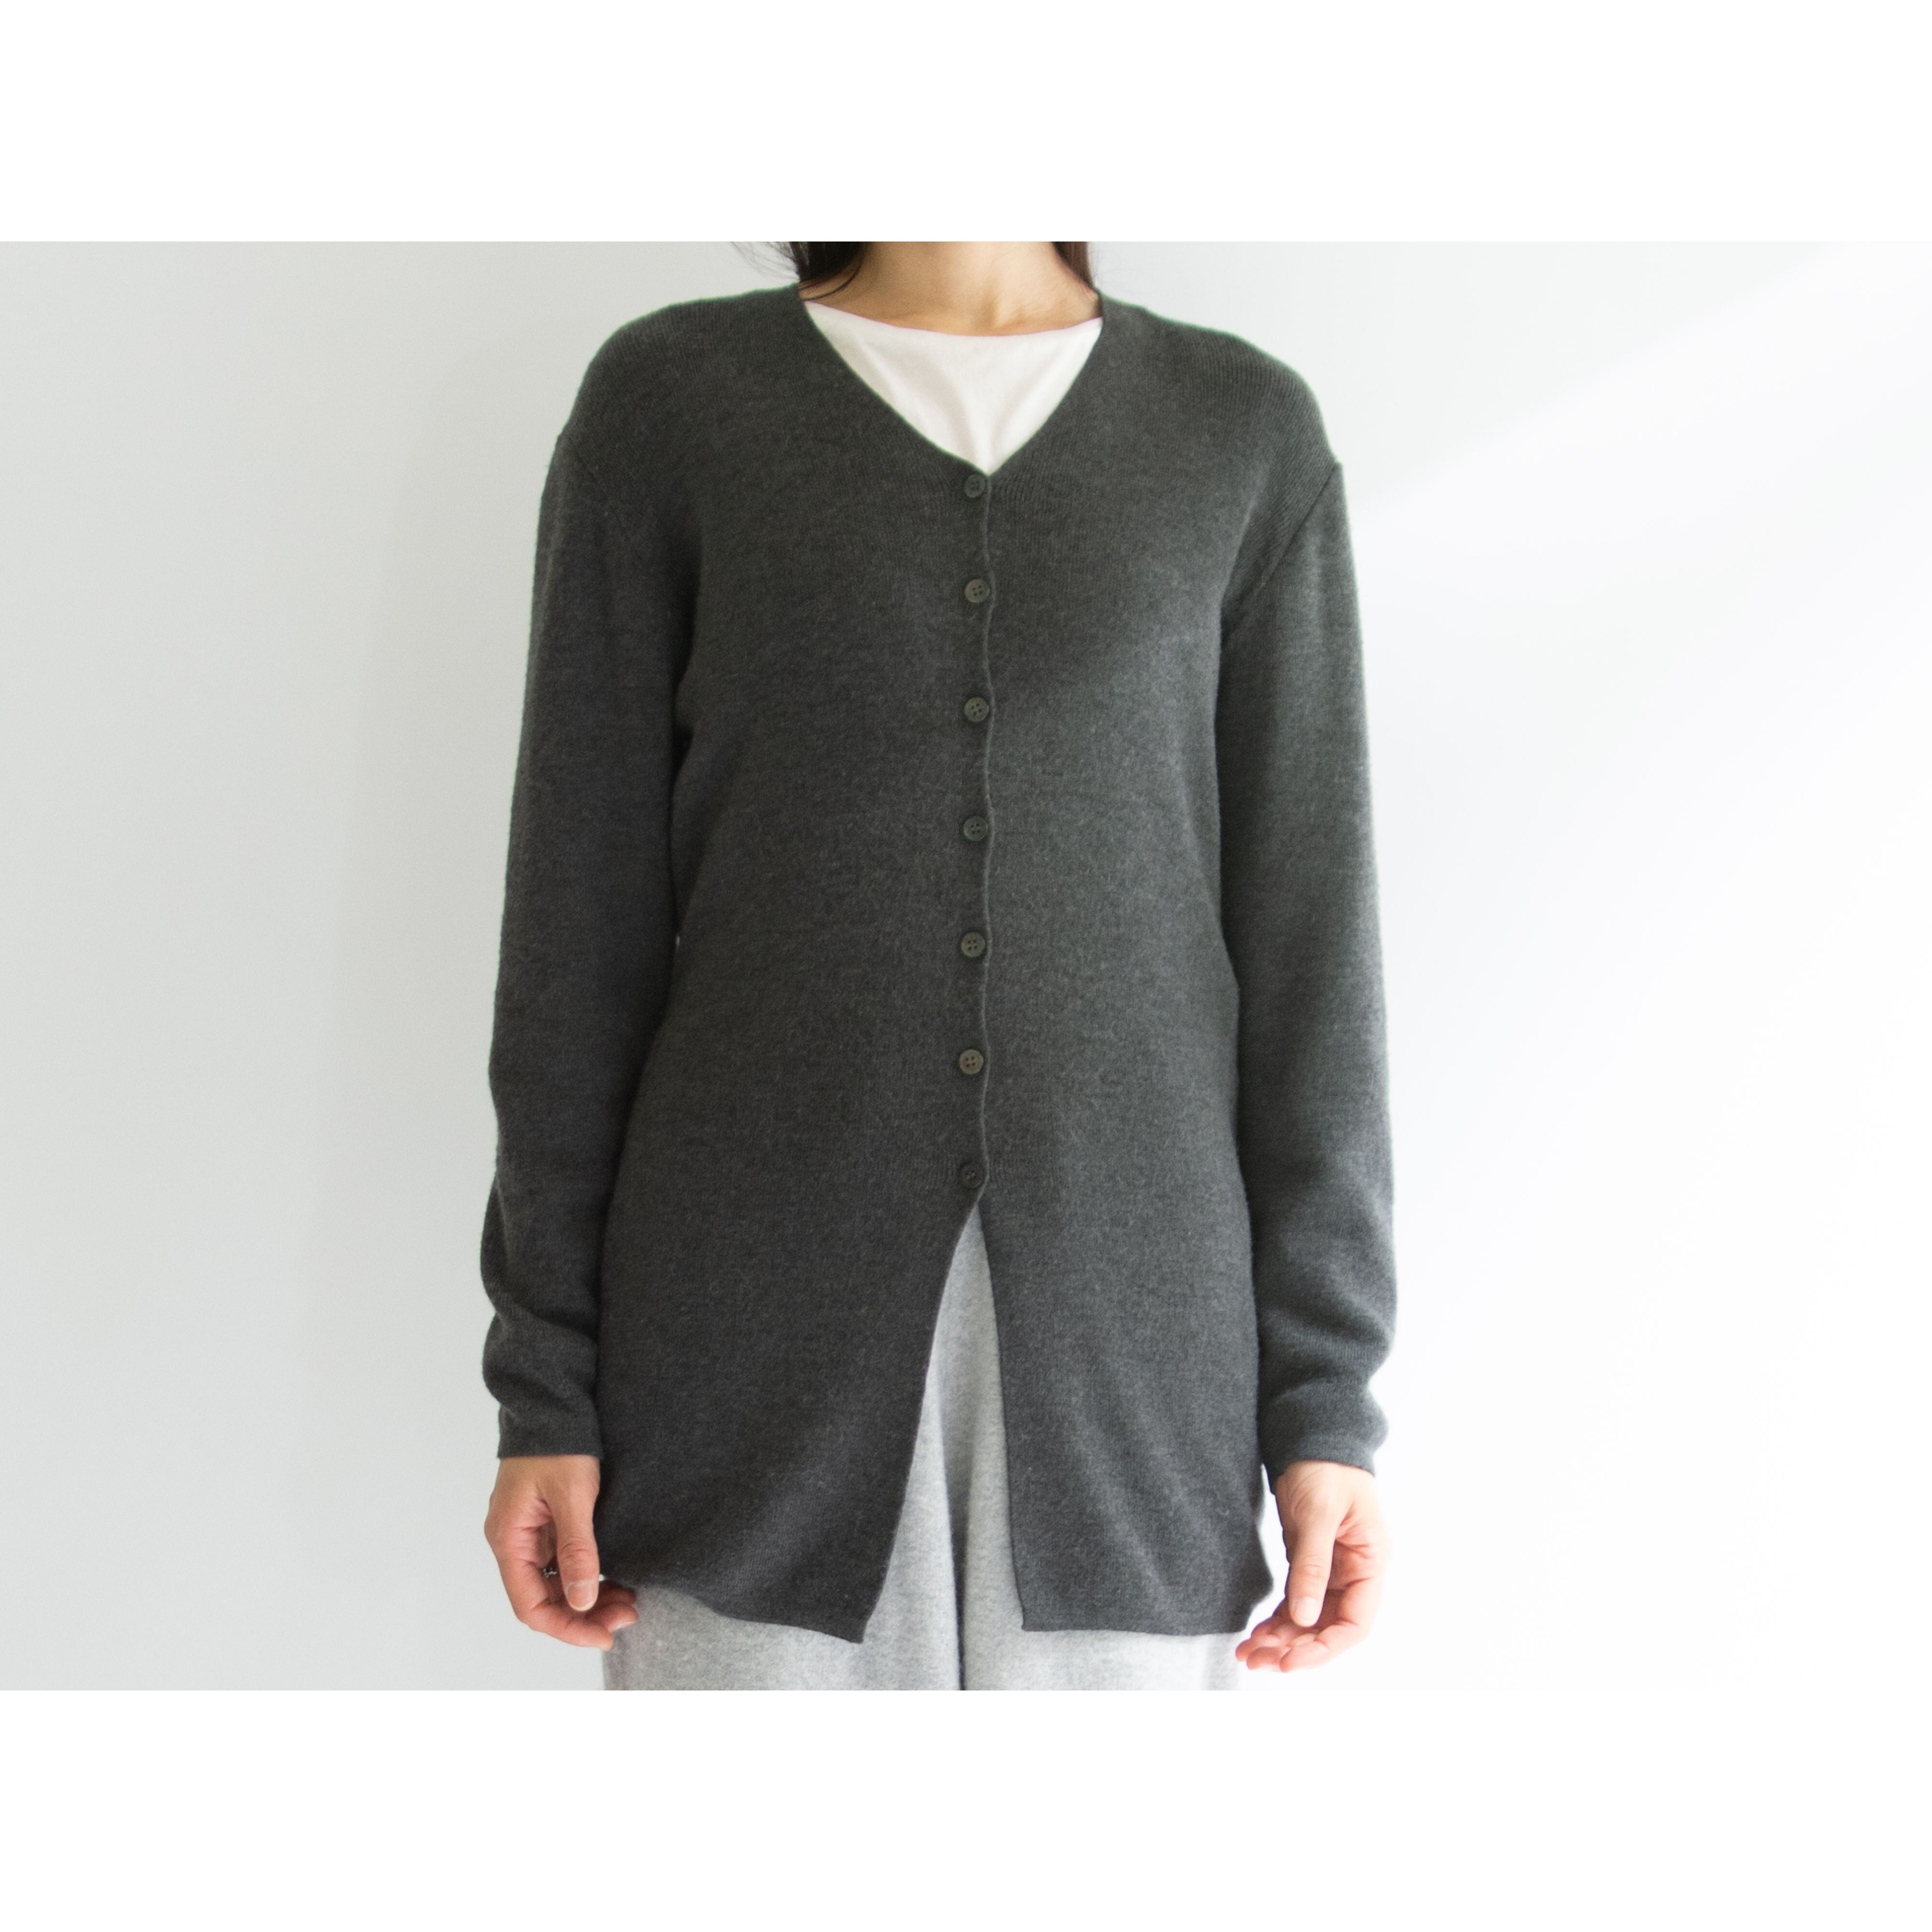 【UNITED COLORS OF BENETTON】Made in Italy Wool-Acrylic Knit Cardigan（ベネトン イタリア製 ウールアクリルニットカーディガン）